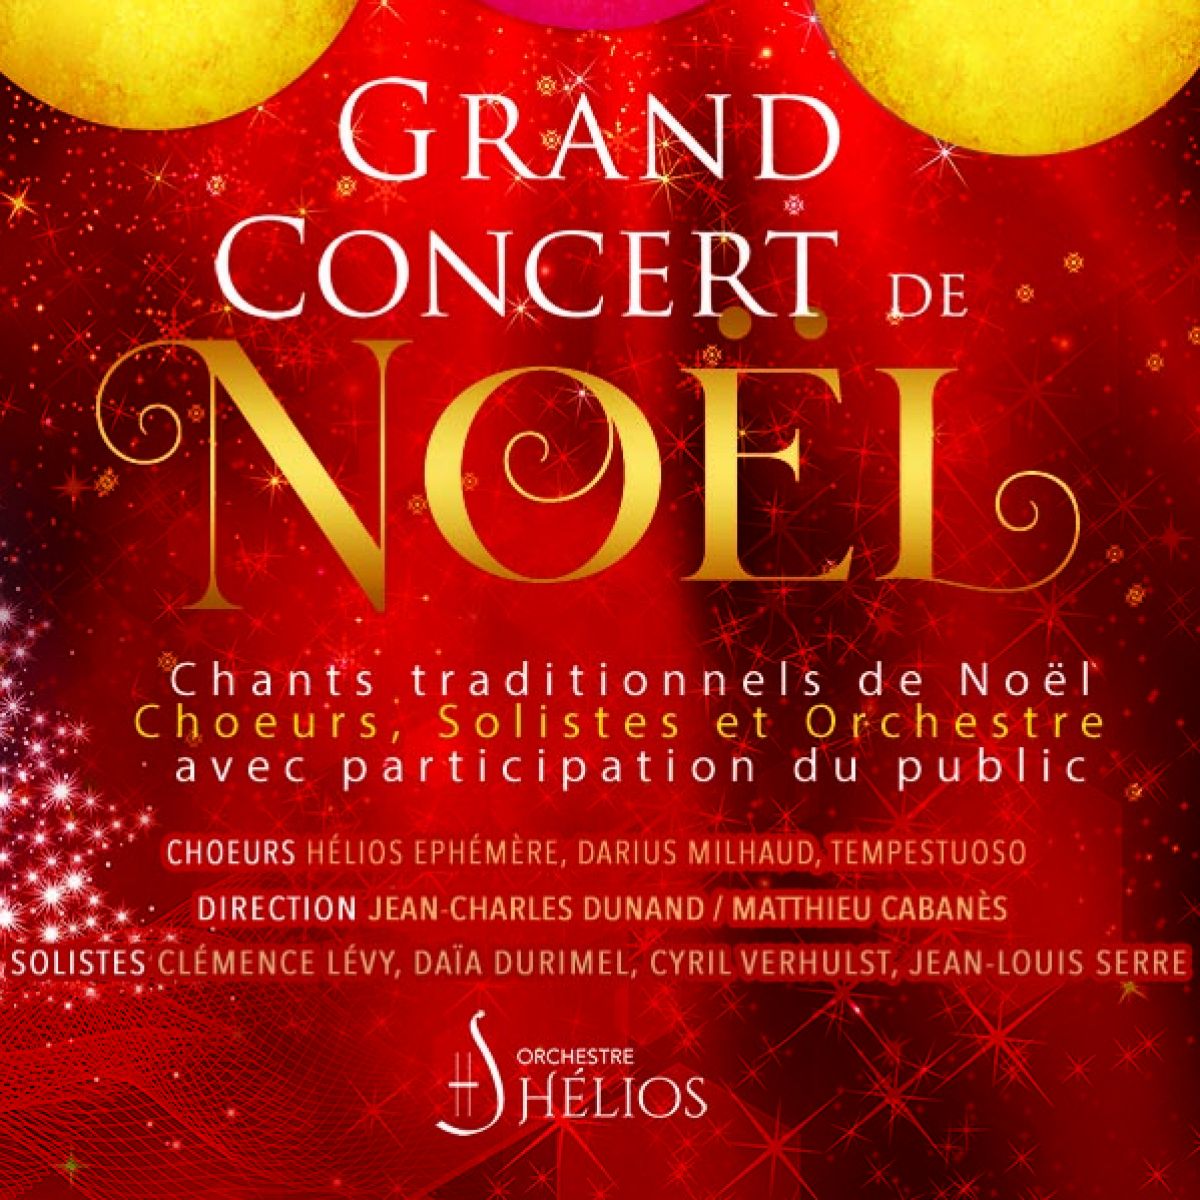 Grand Concert de Chants Traditionnels de Noël